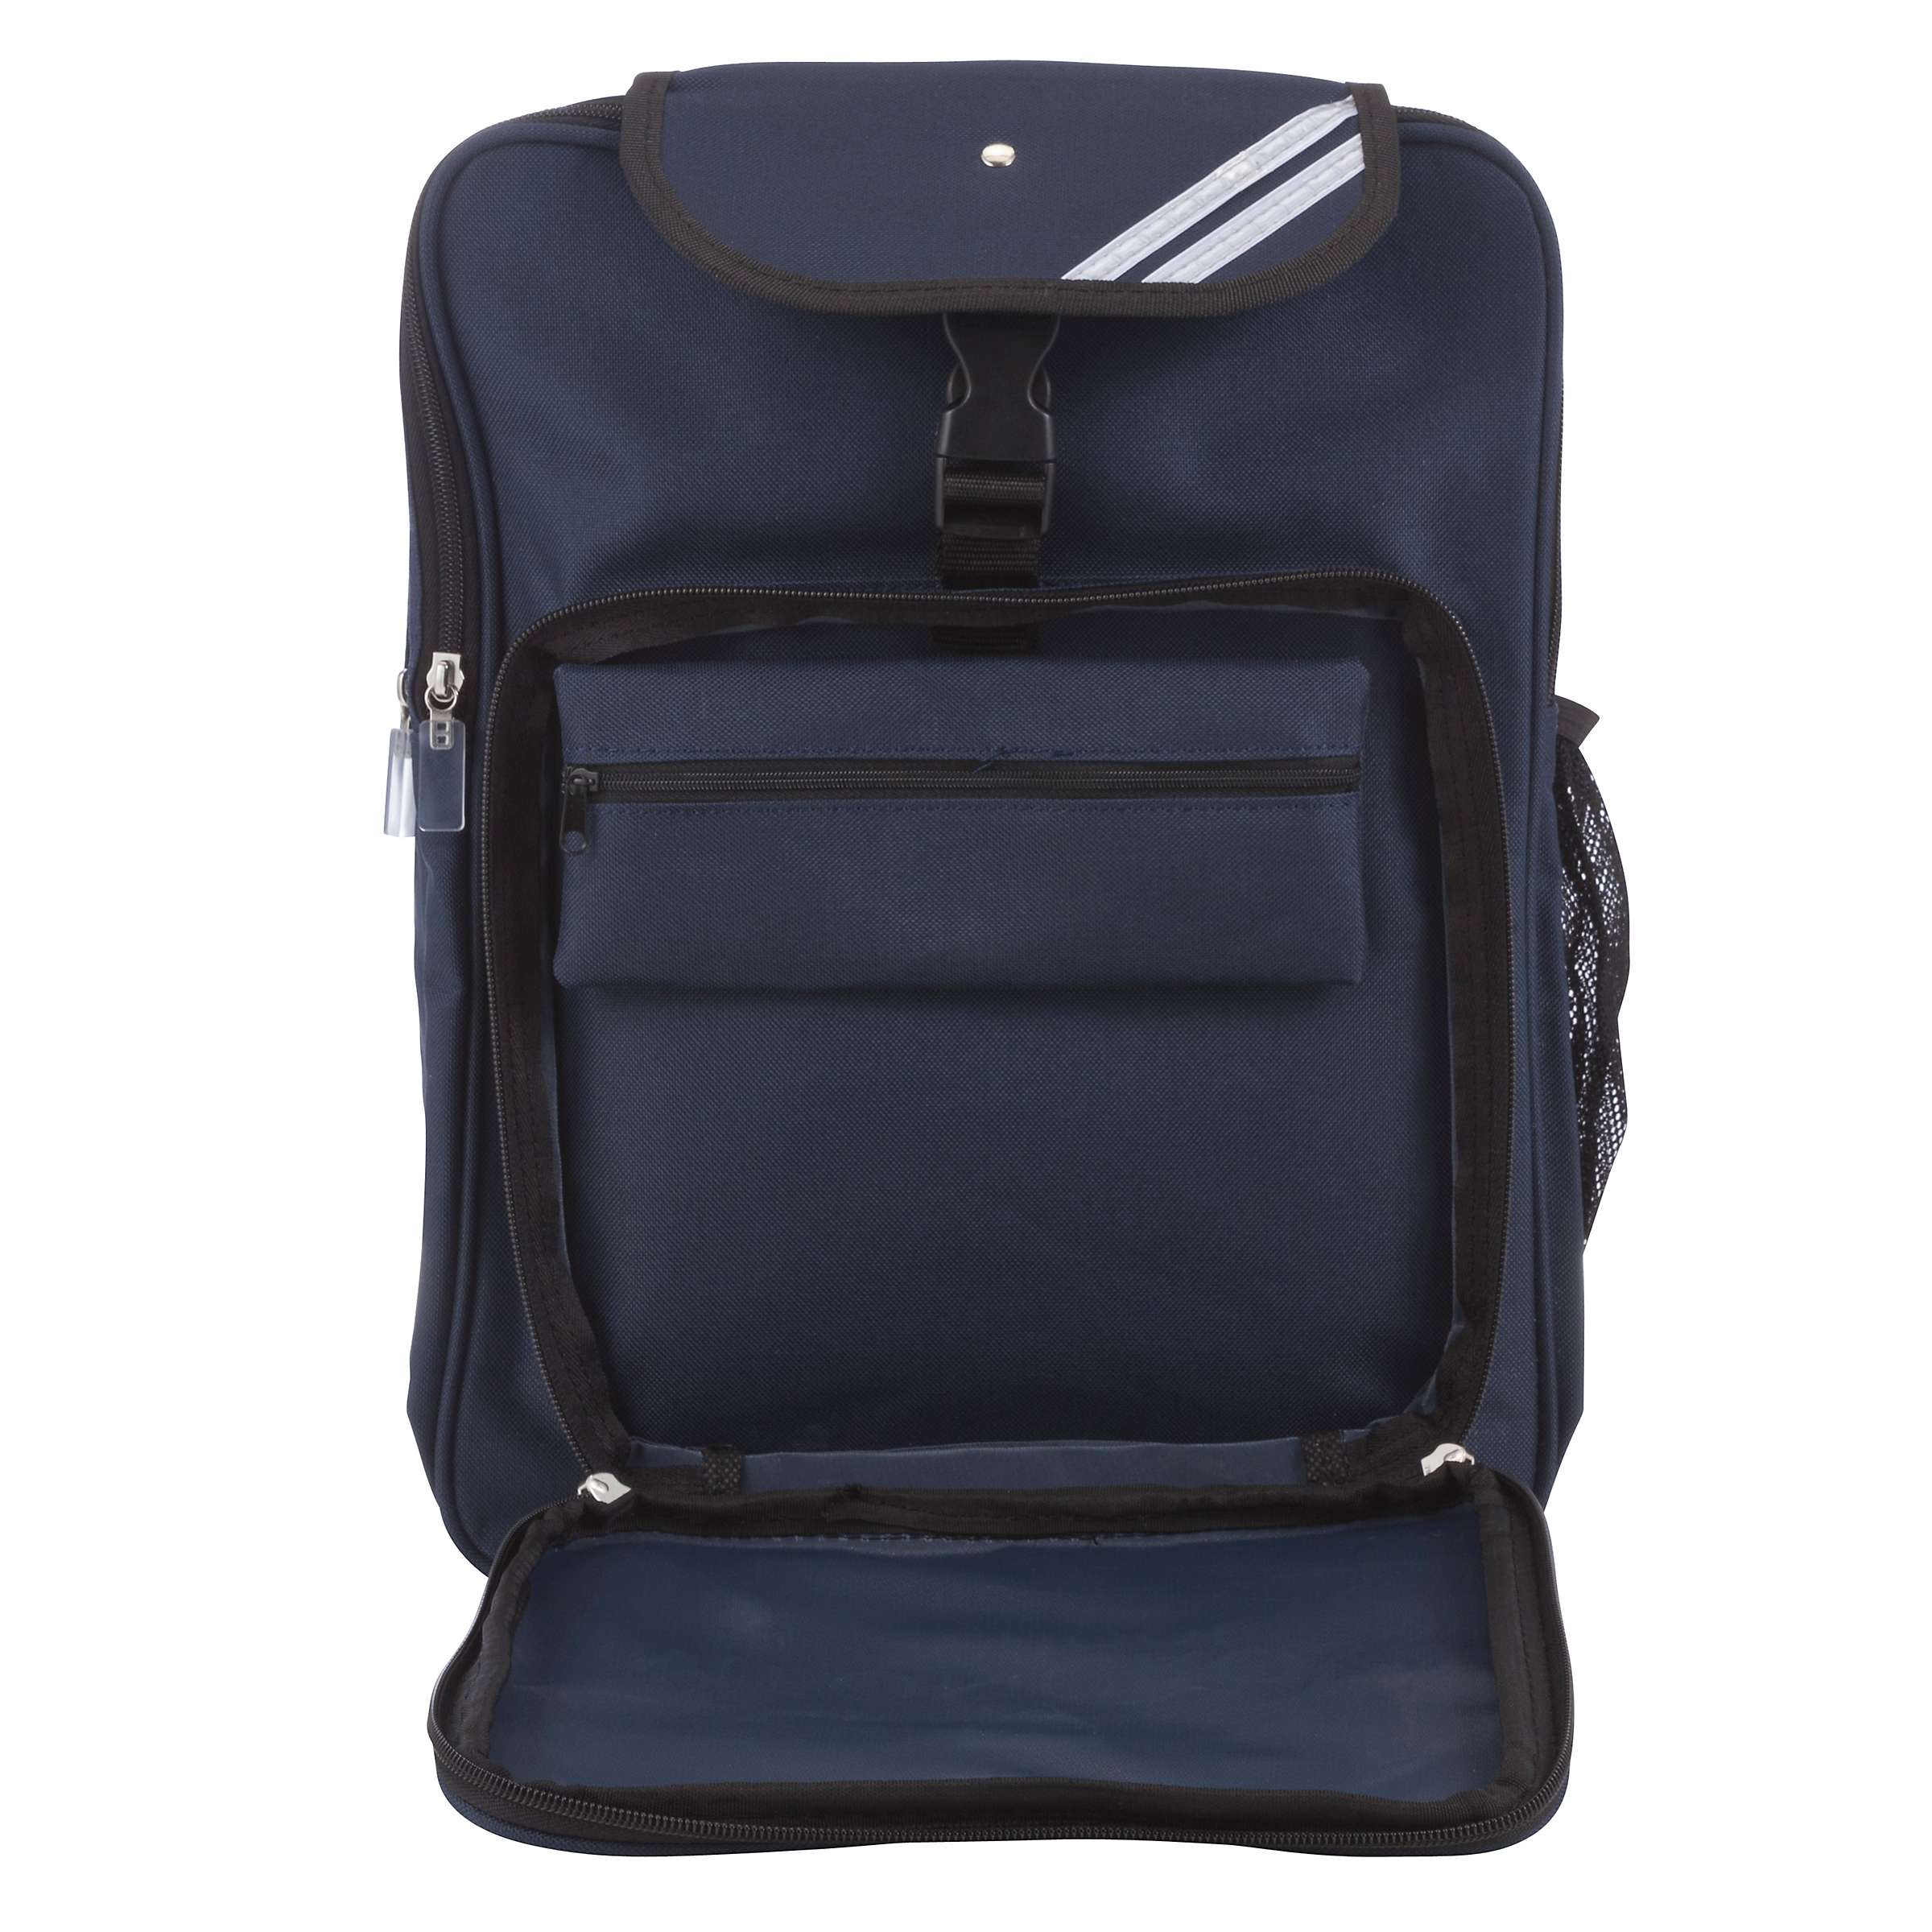 Buy Meoncross School Backpack, Navy Online at johnlewis.com